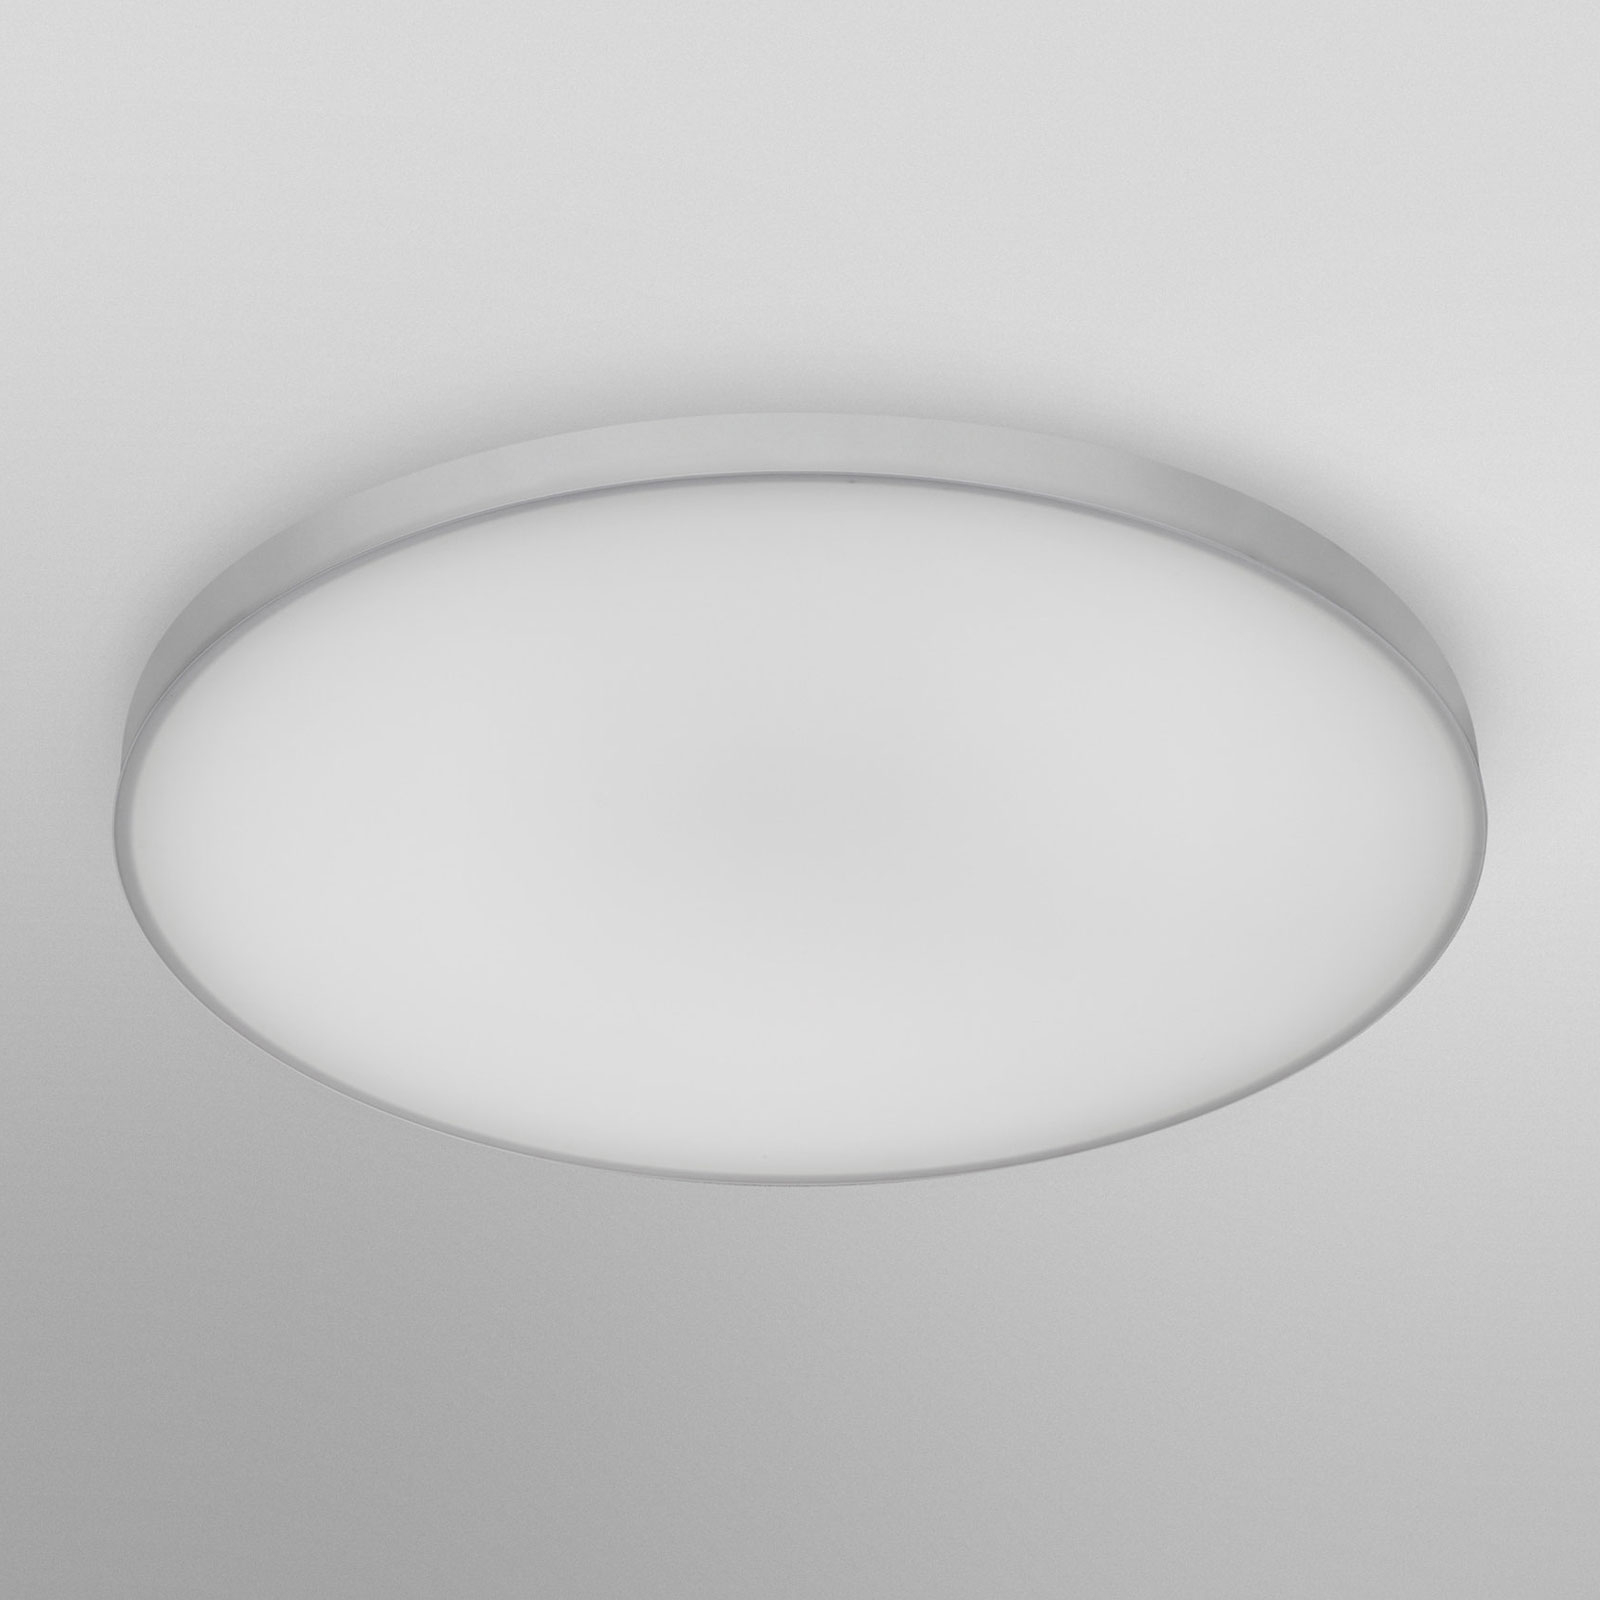 LEDVANCE SMART+ WiFi Planon LED paneel RGBW Ø30cm